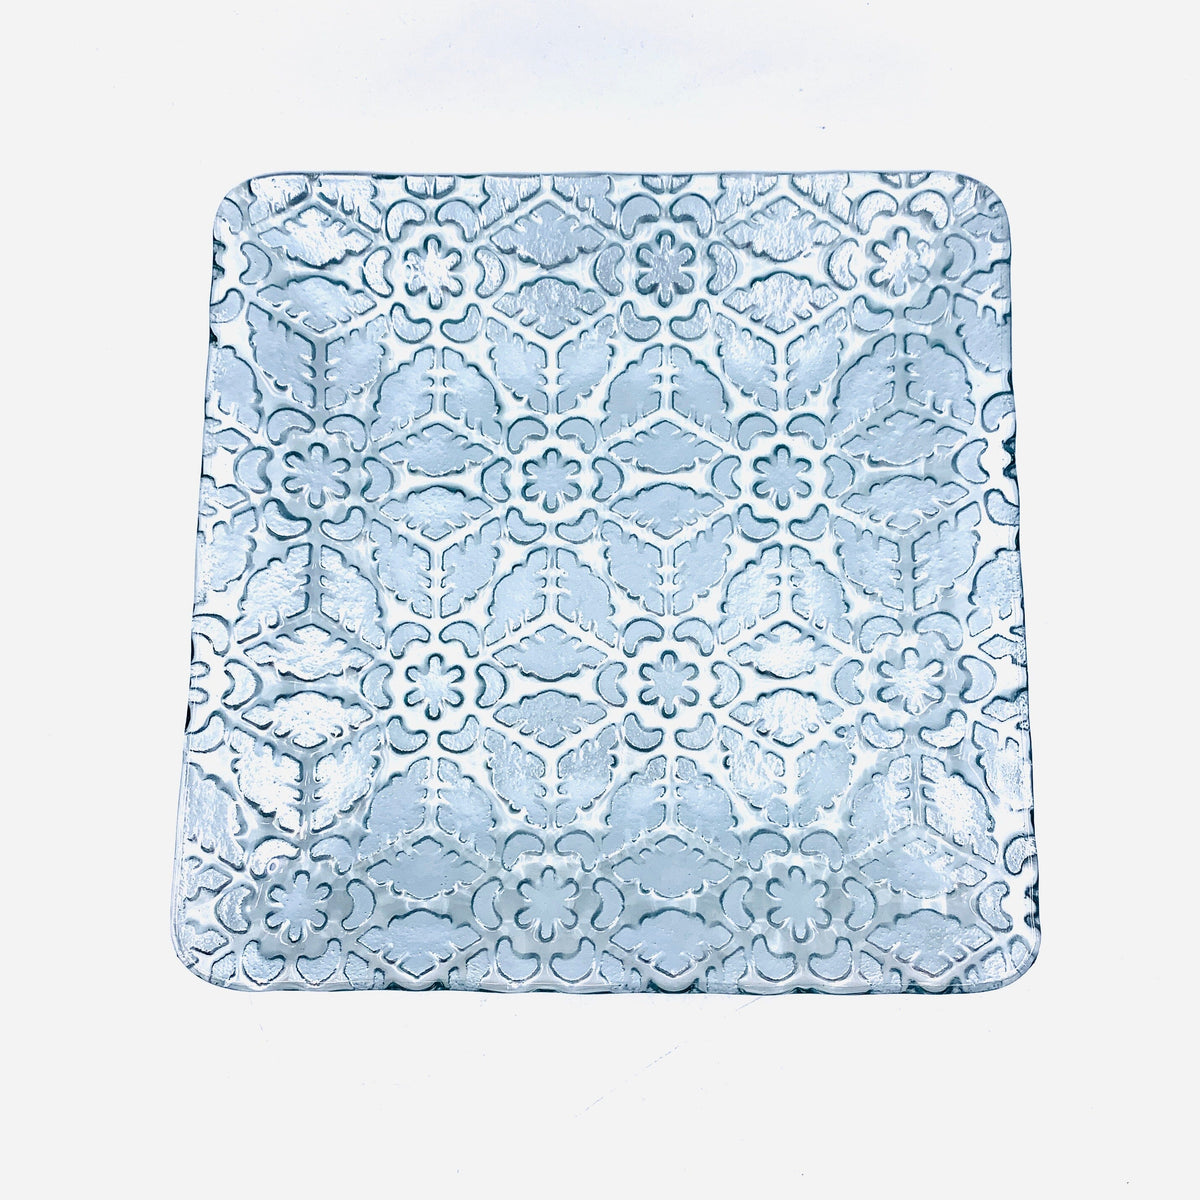 Glass Fusion Plate, Silver Filigree 26 Decor Boston International, INC 